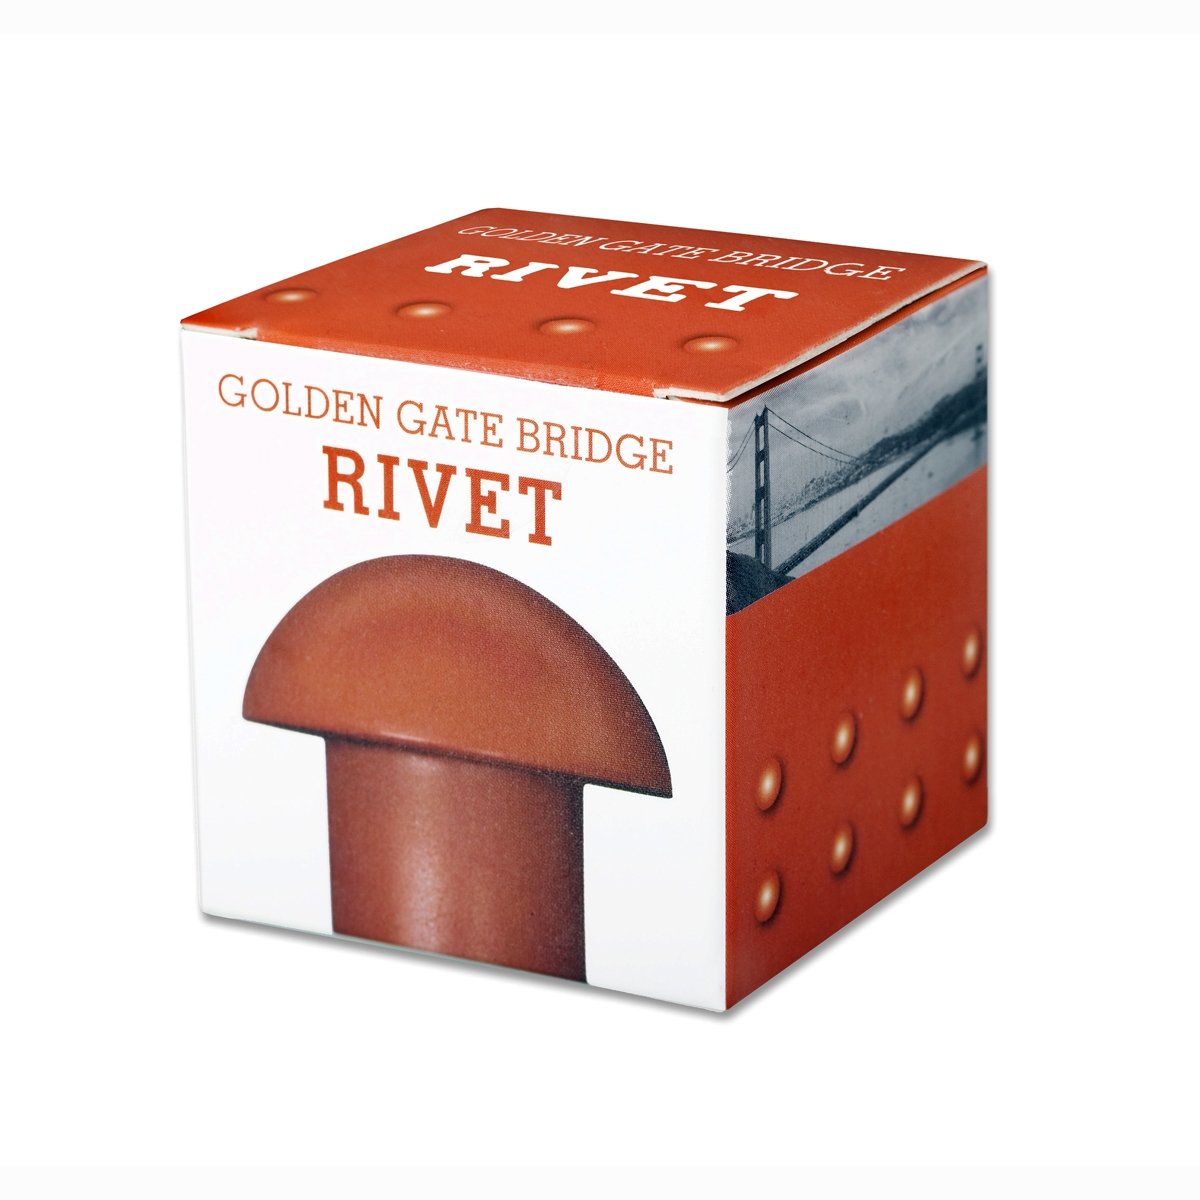 Replica Golden Gate Bridge rivet, made of stainless steel, painted International Orange, sold in interpretive gift box.